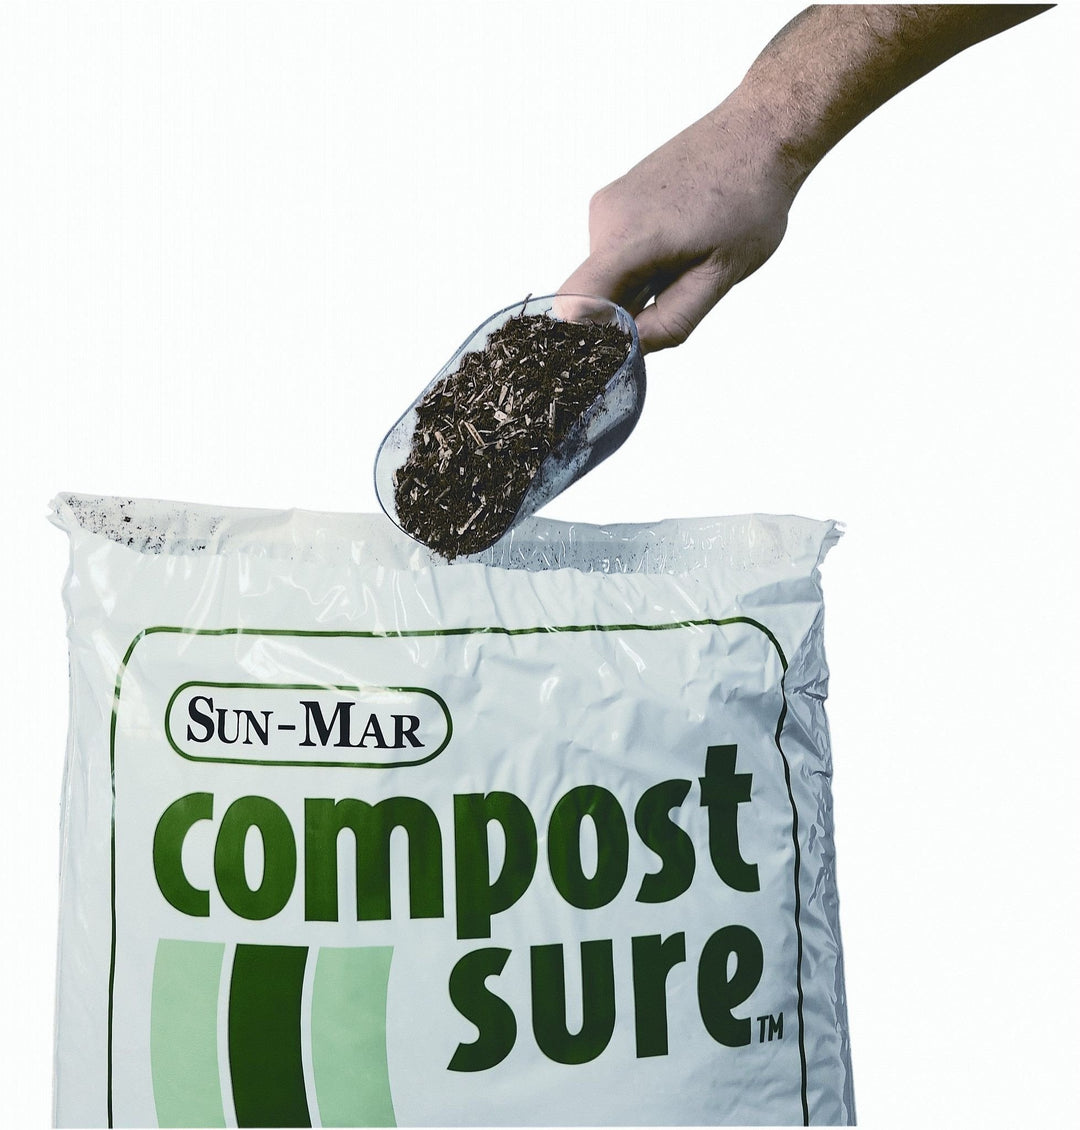 Sun-Mar Sun-Mar's Compost Sure Green Bulking Material